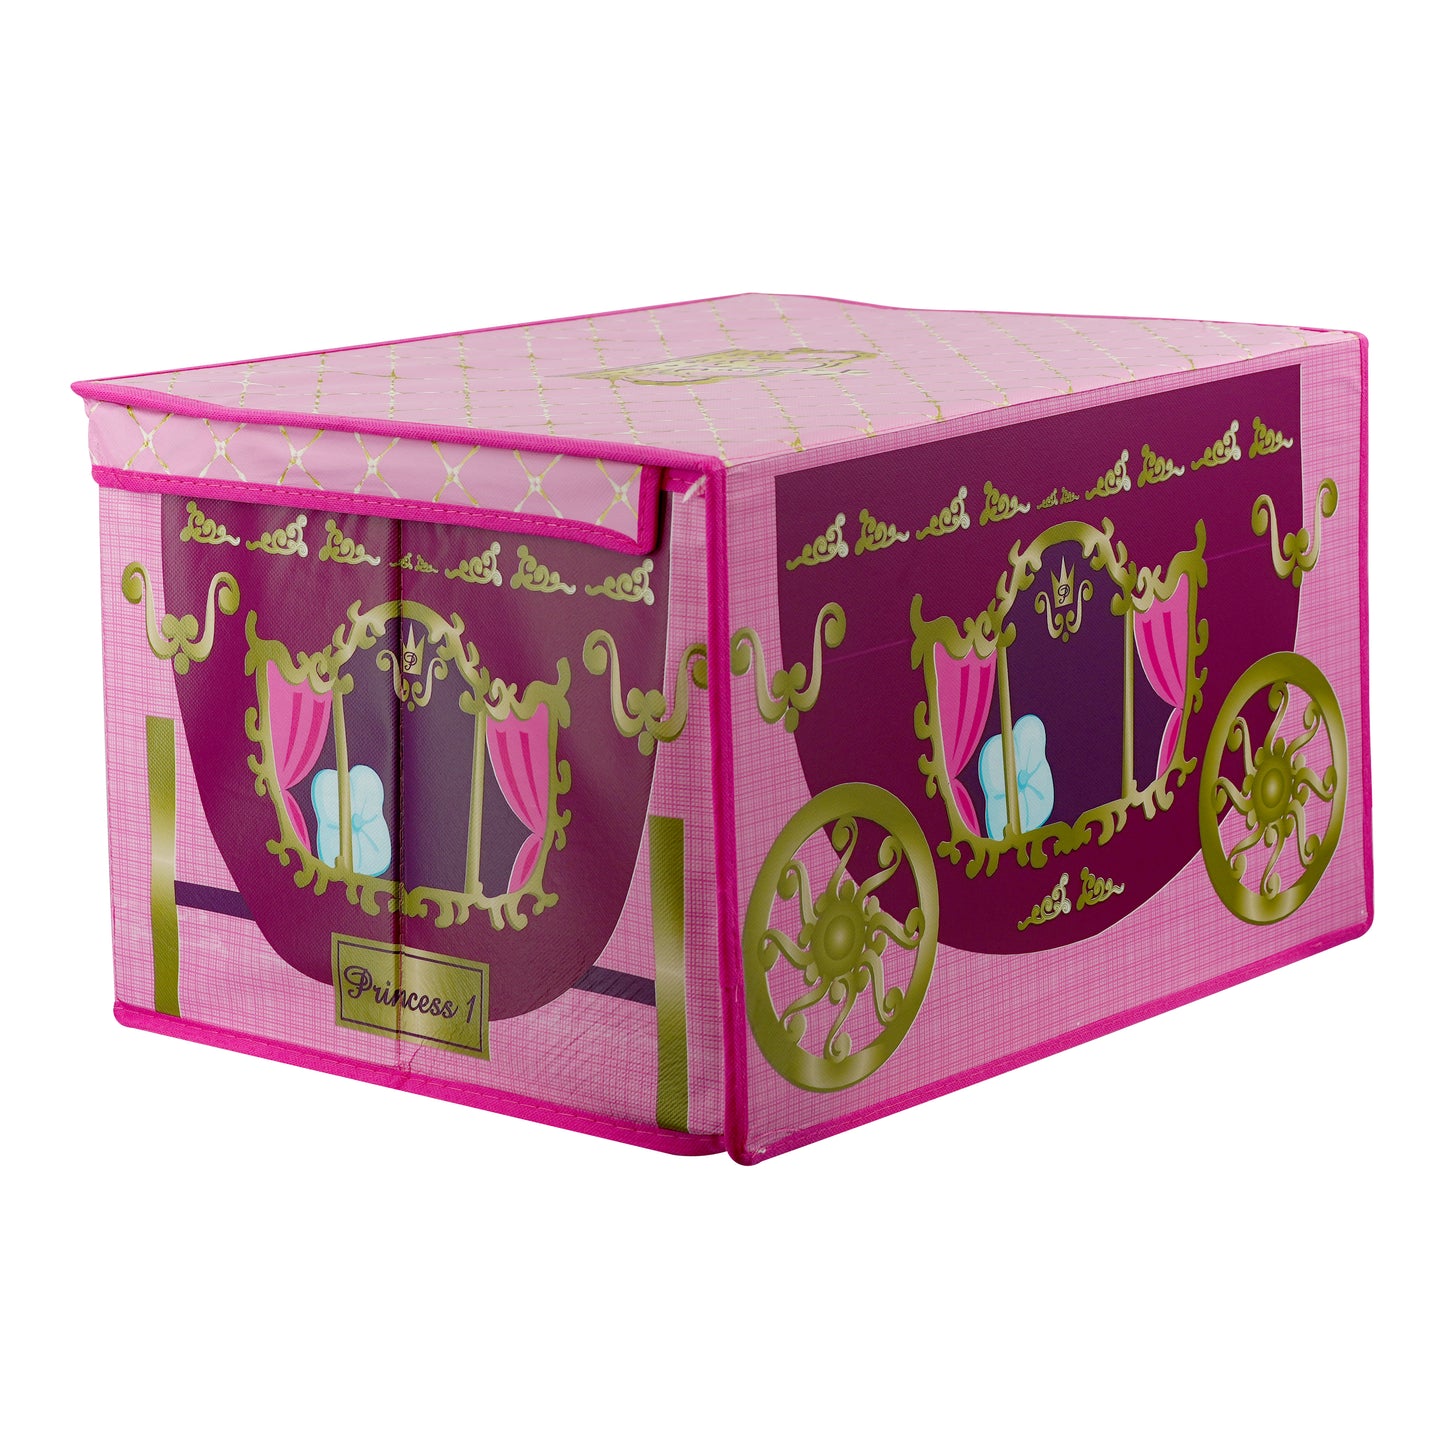 Carriage Large Storage Box by The Magic Toy Shop - UKBuyZone